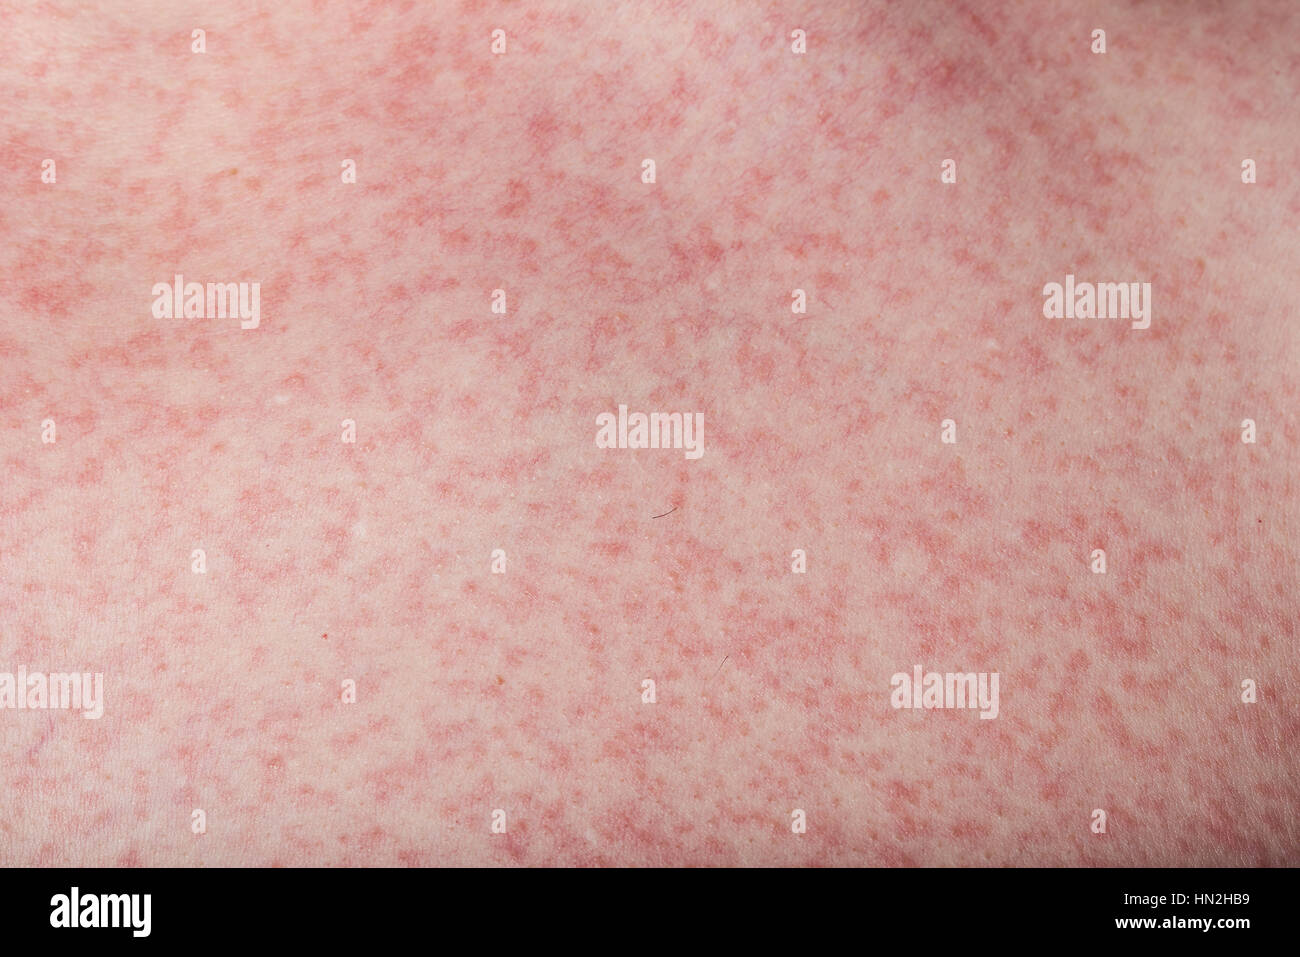 macro of skin with rash from dengue disease Stock Photo